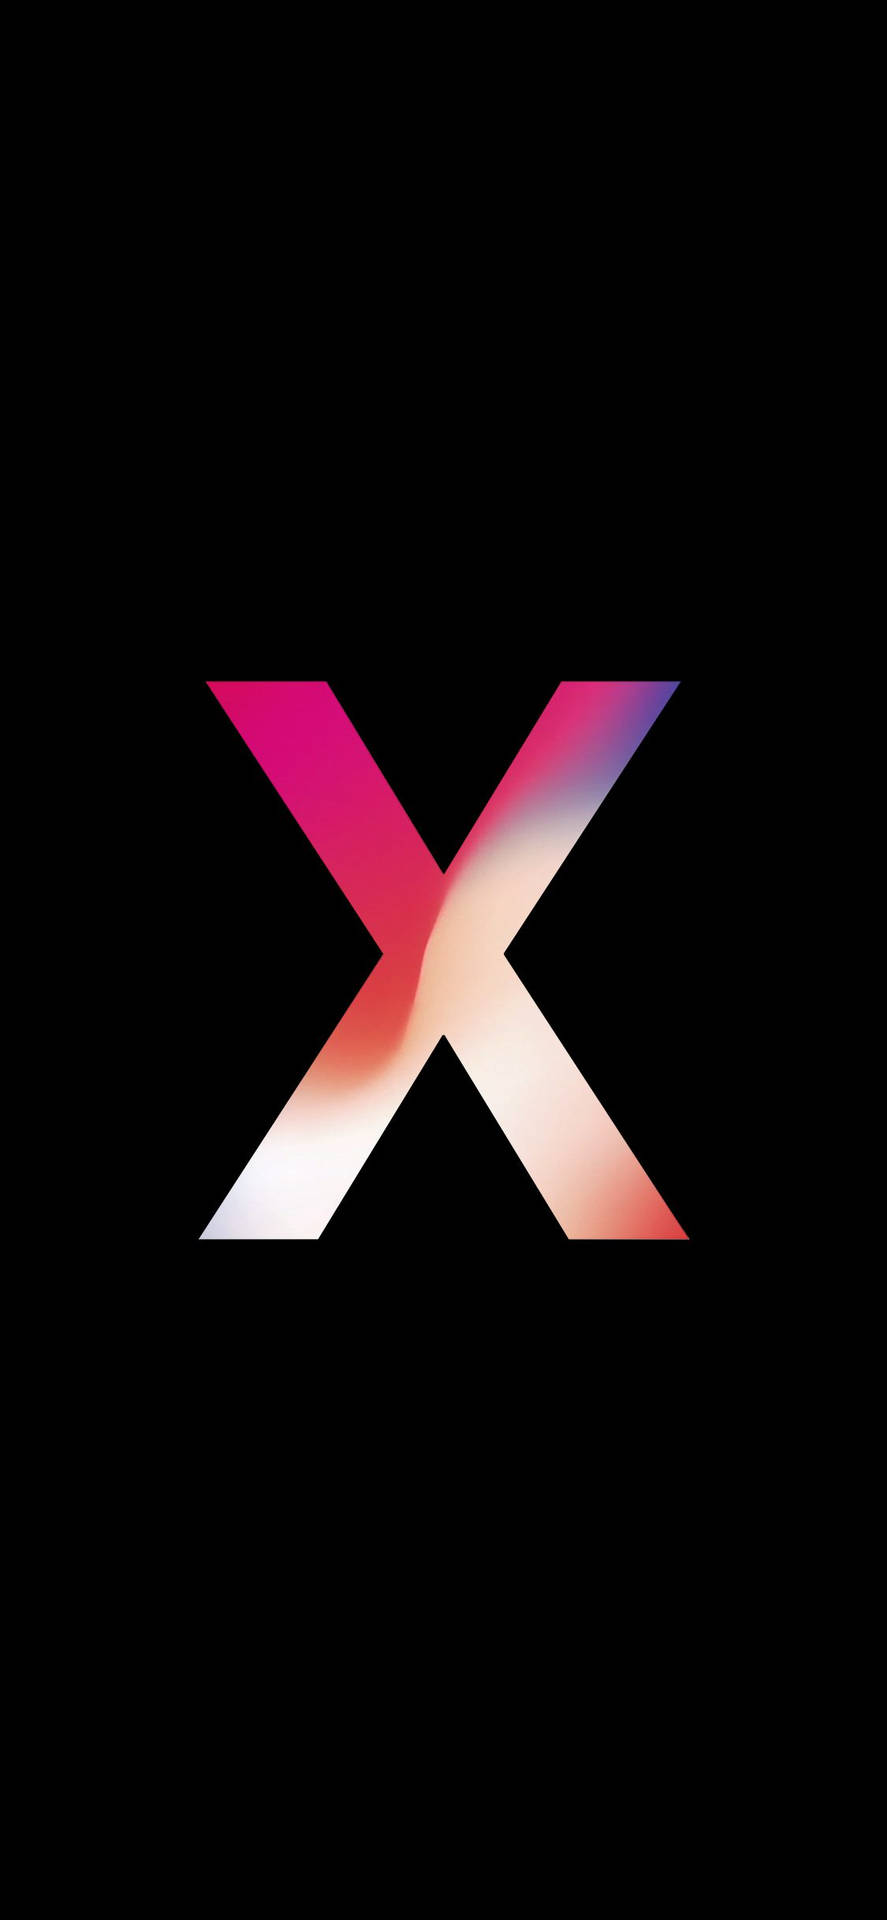 iPhone X Logo Oled iPhone Wallpaper